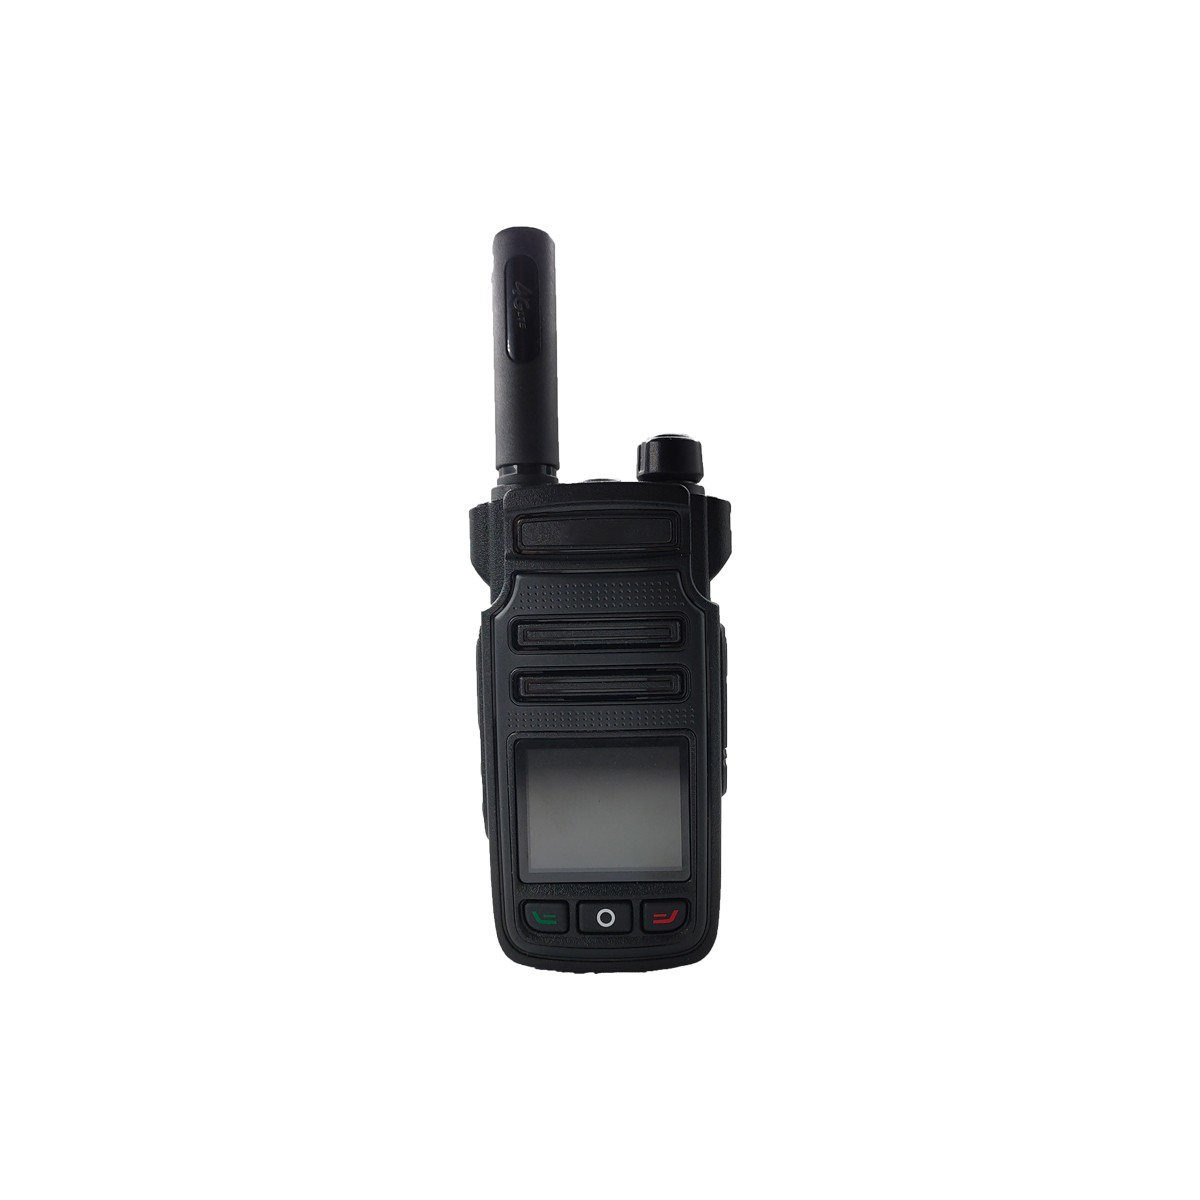 QYT ใหม่ Android ทางไกล 4g เครื่องส่งรับวิทยุ NH-75 GPS
